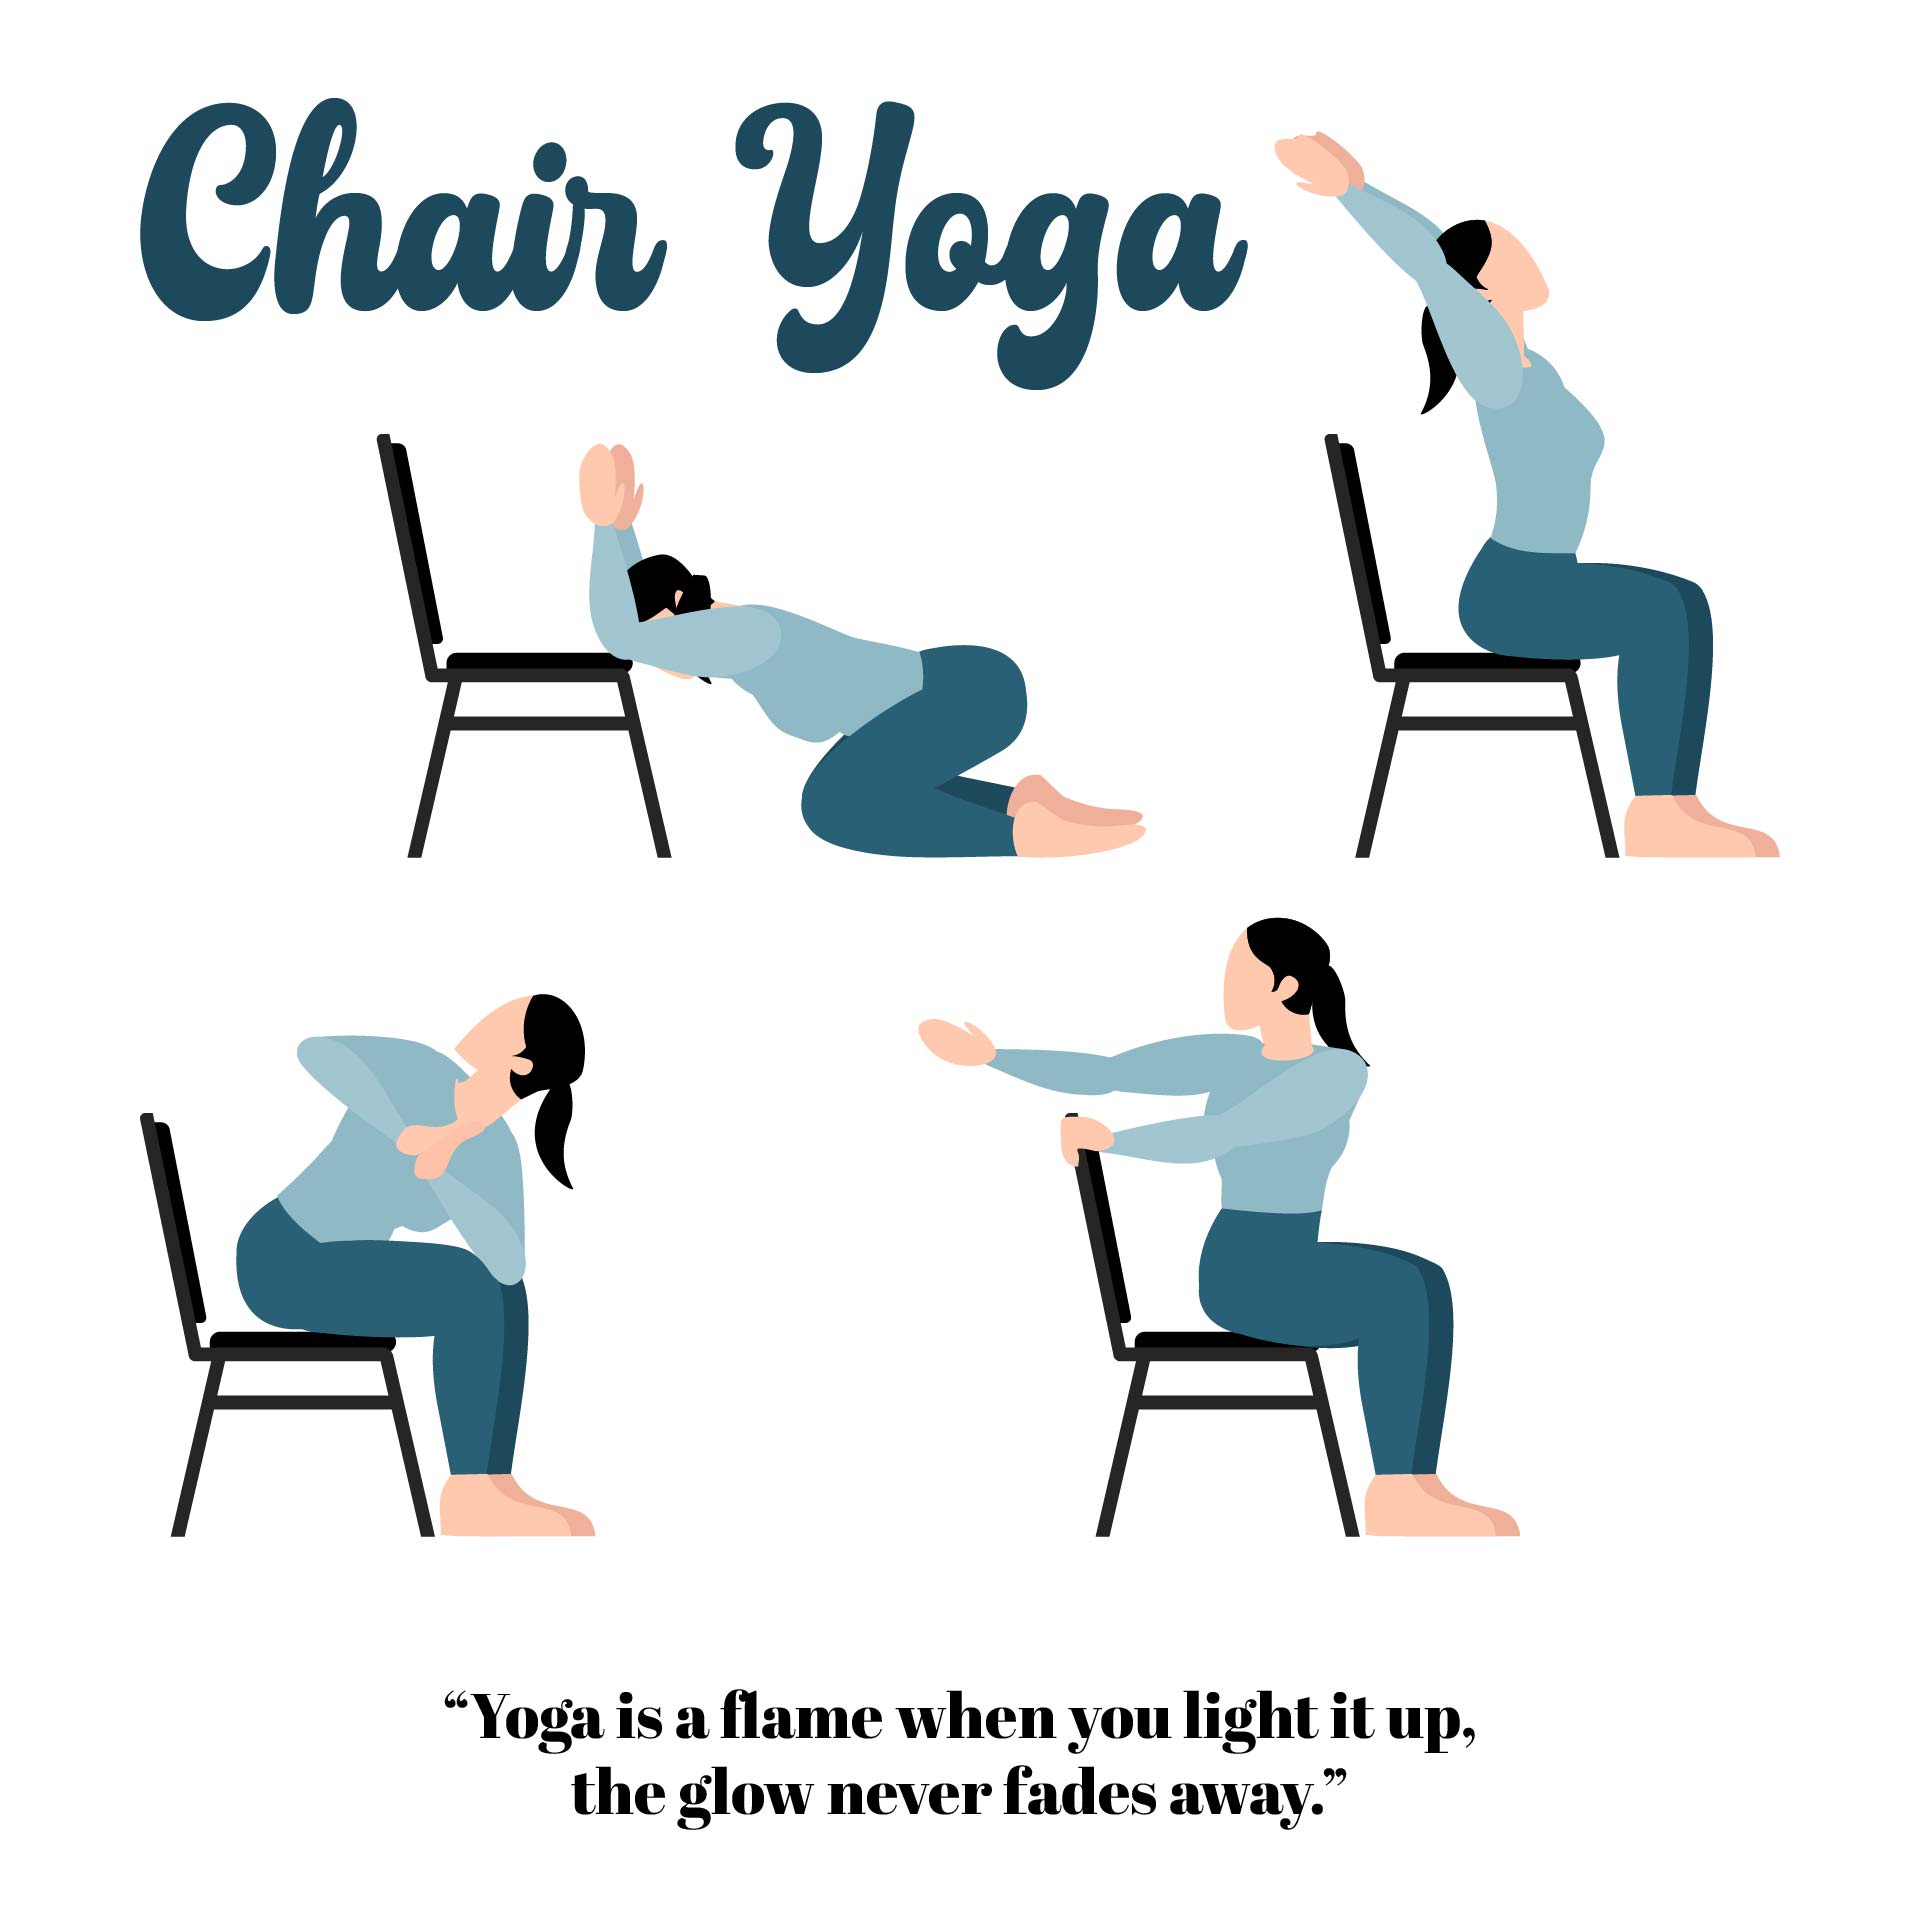 Printable Chair Yoga Exercises for Seniors